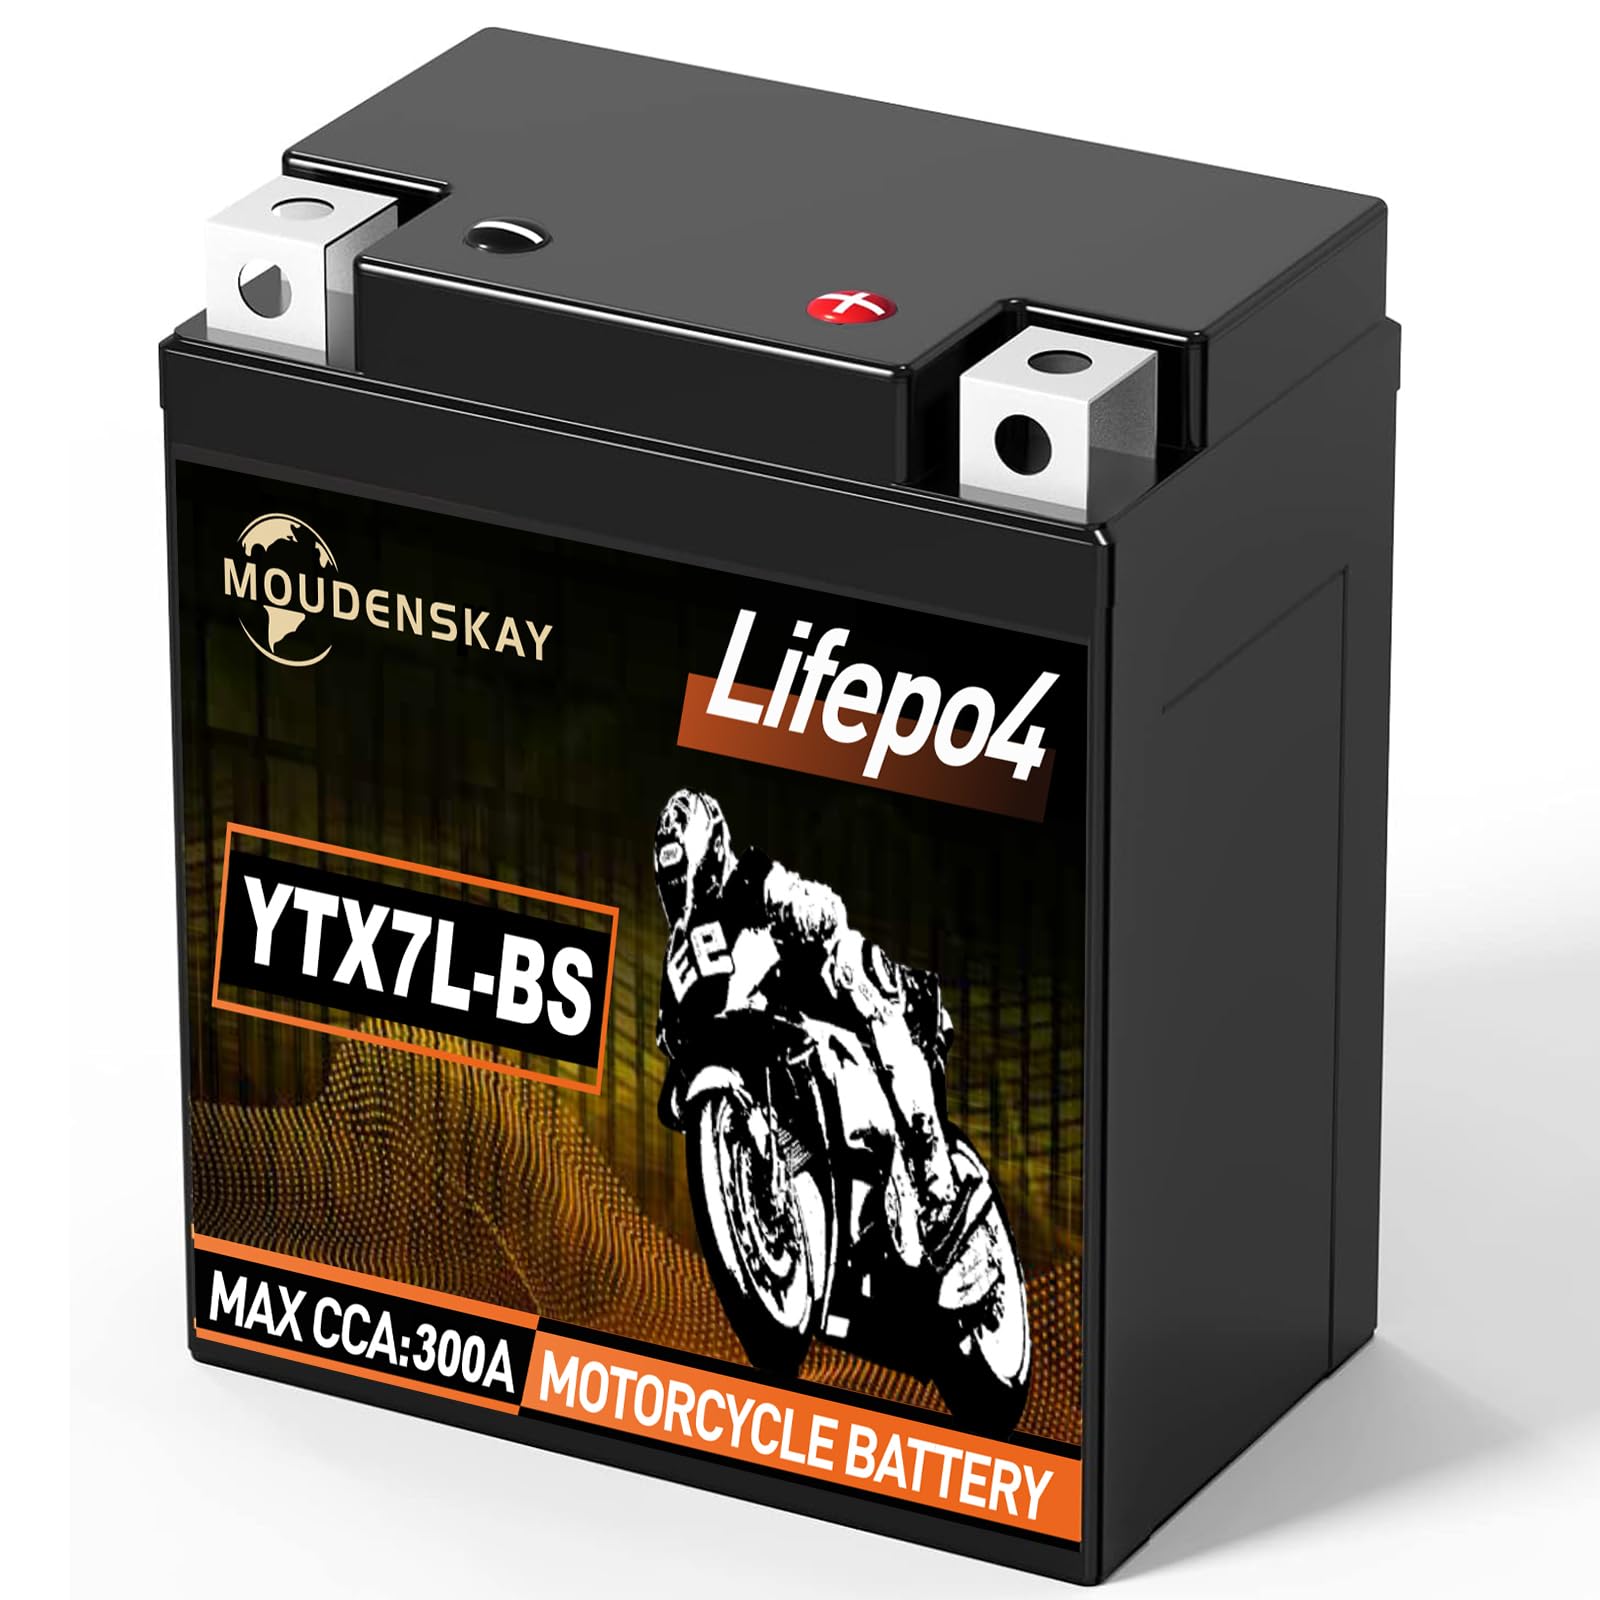 MOUDENSKAY Lithium Motorrad Batterie 12V Lithium Powersports Batterie mit BMS (YTX7L-BS 12.8V 3Ah 300A) LiFePO4 Motorrad Batterie Starterbatterien für Motorräder, ATV, UTV, Wasserfahrzeuge, etc von MOUDENSKAY